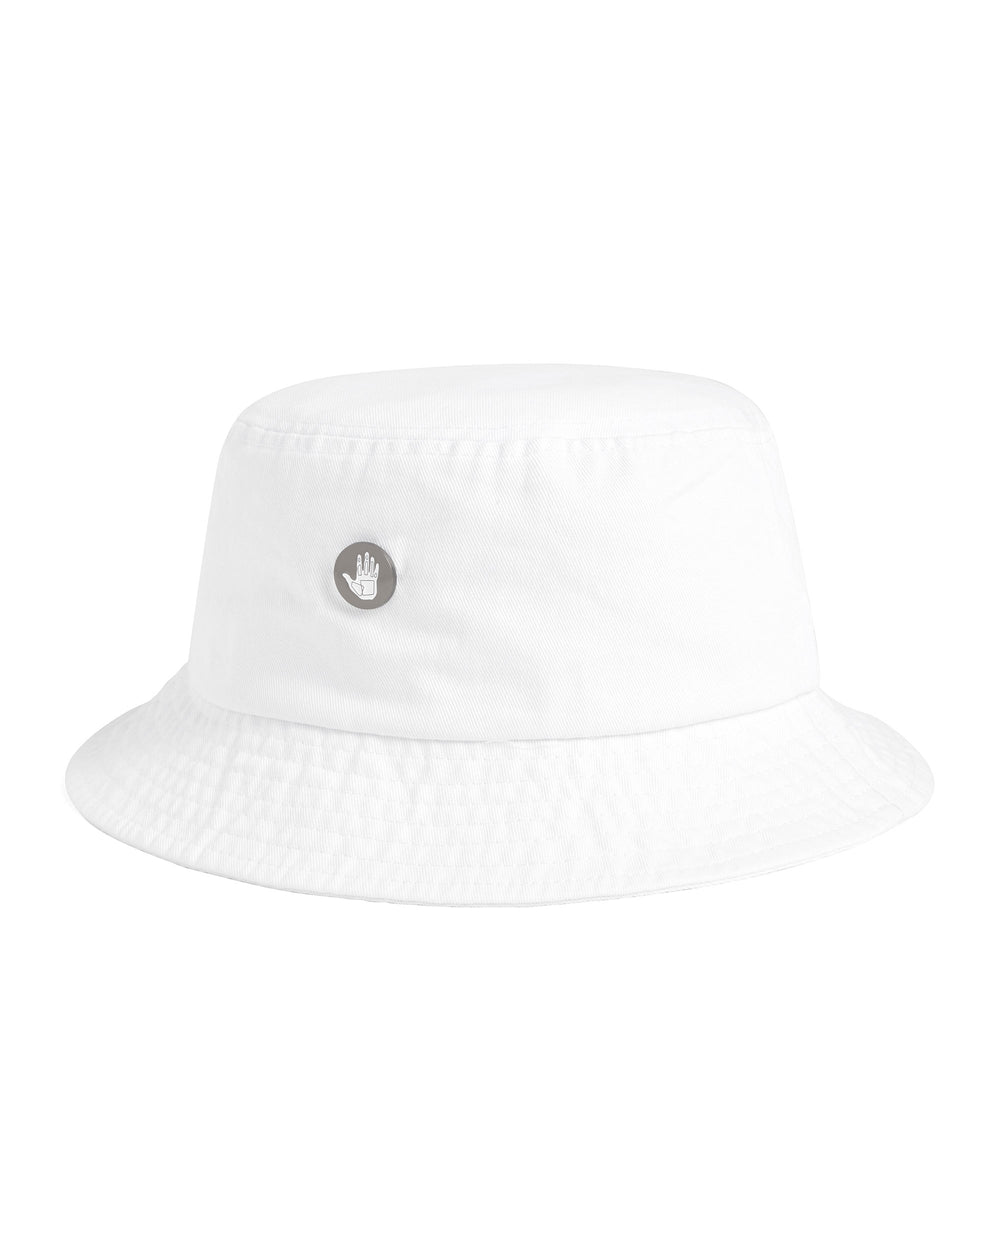 Tati x Body Glove Hand Logo Bucket Hat - White